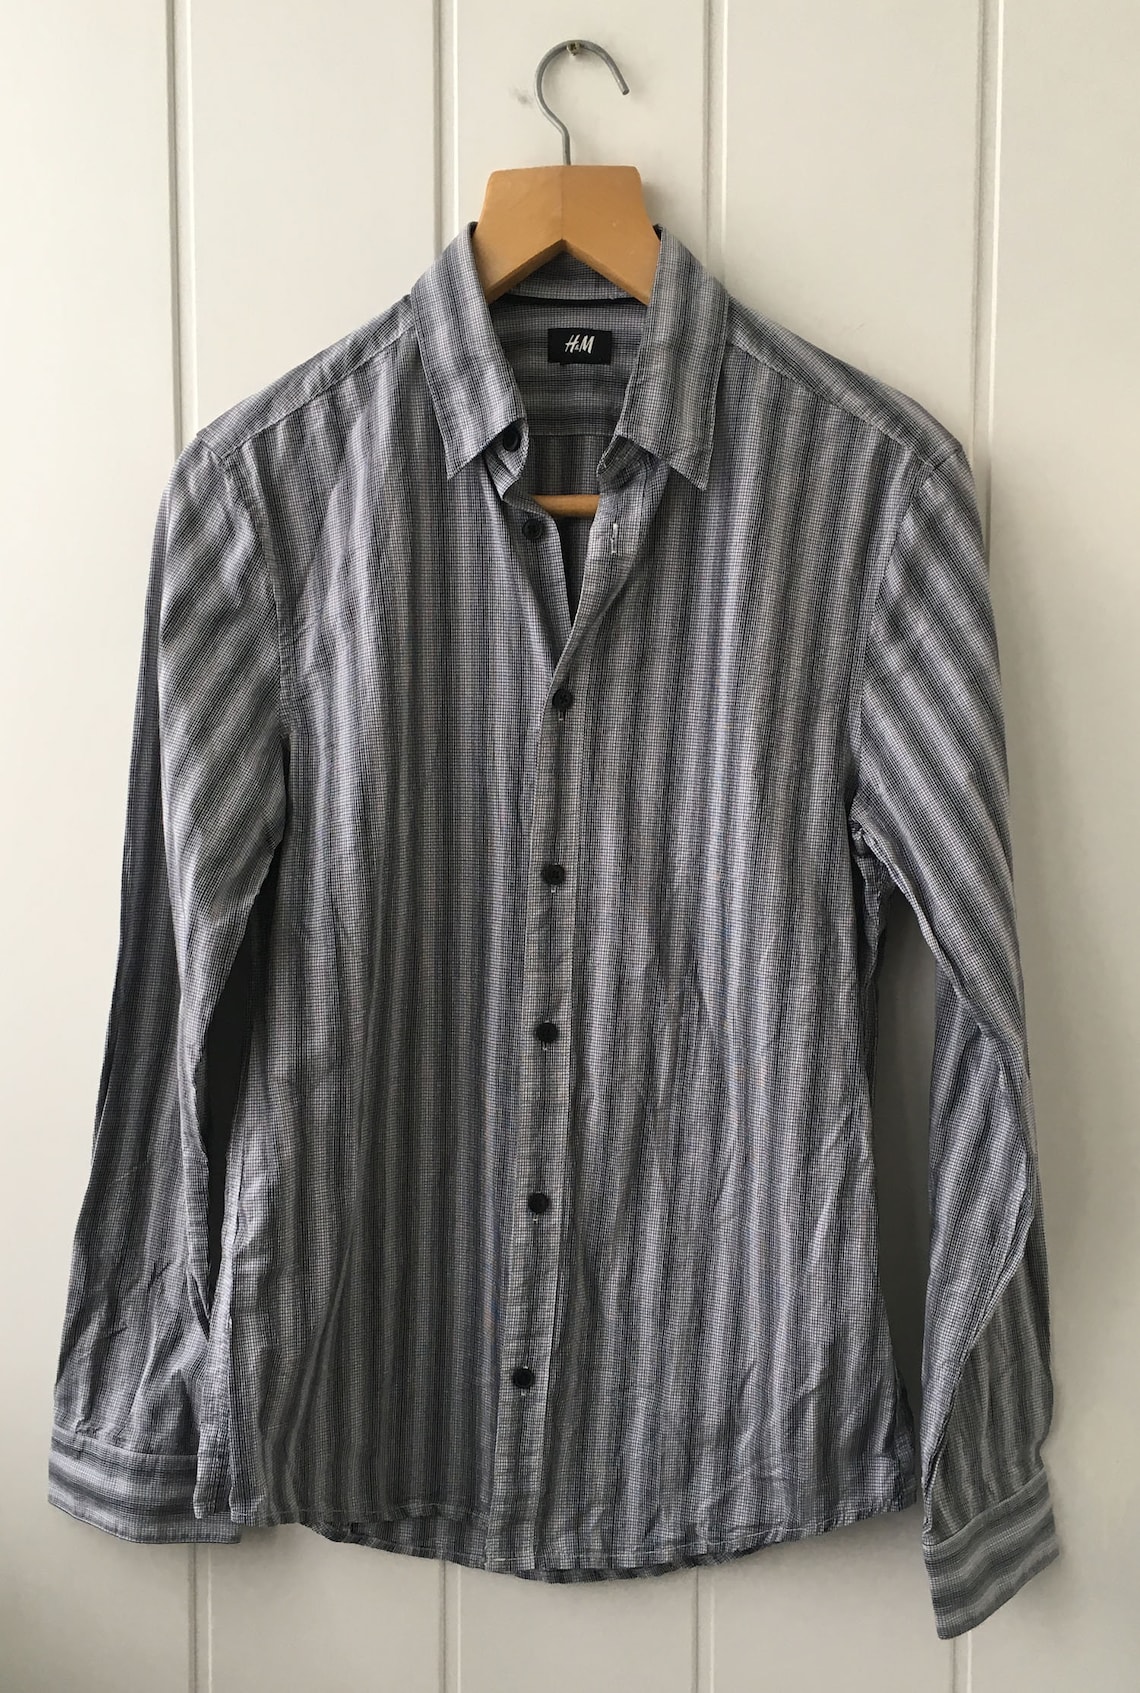 90's Men's Gray White Shirt Striped Gray Strip Shirt - Etsy